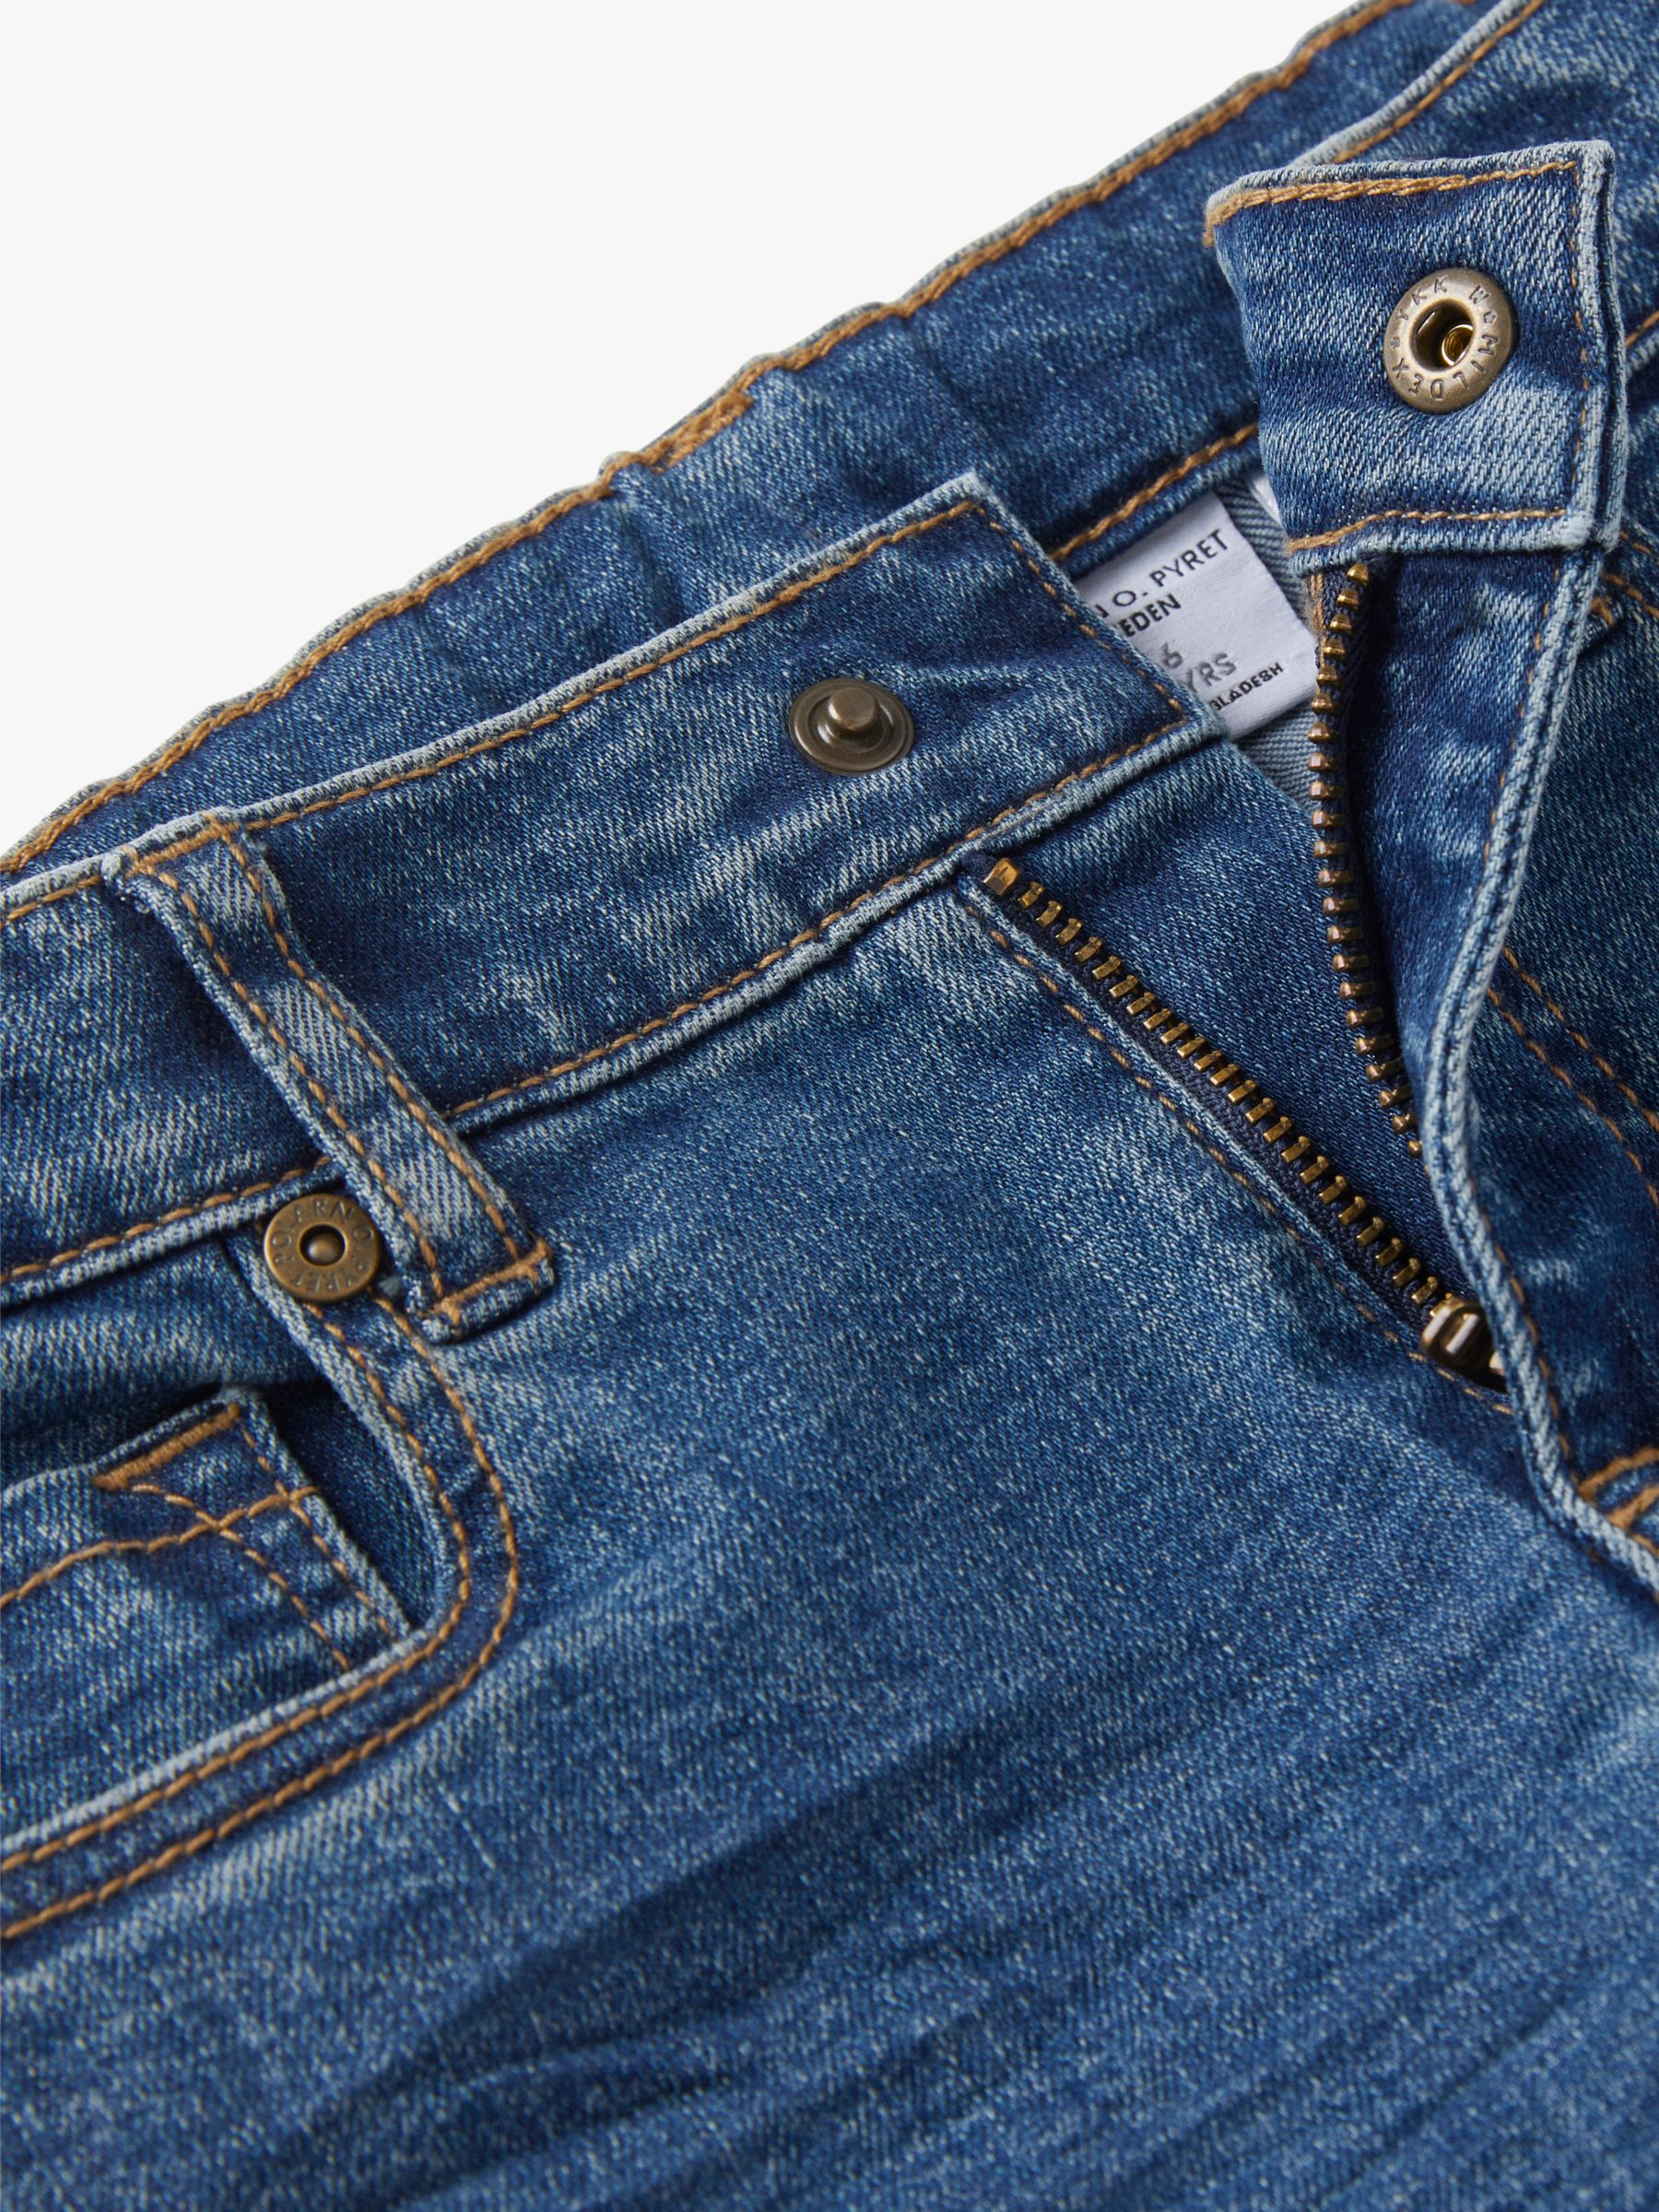 Polarn O. Pyret Kids' GOTS Organic Cotton Super Slim Jeans, Blue, 2-3 years